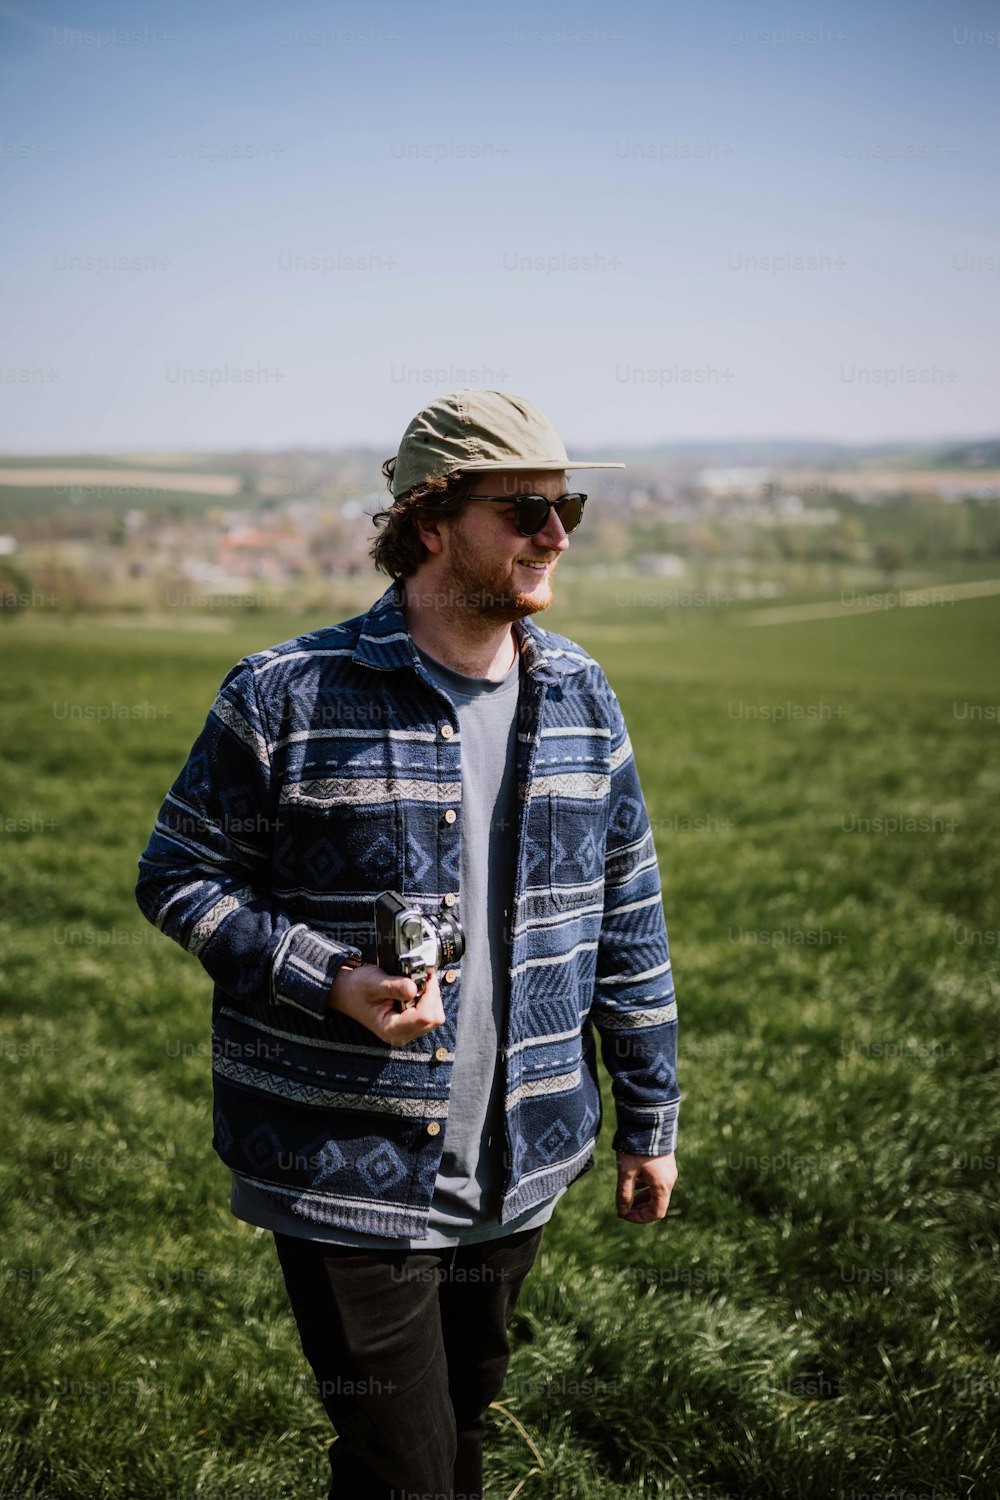 Un uomo in piedi in un campo con una birra in mano